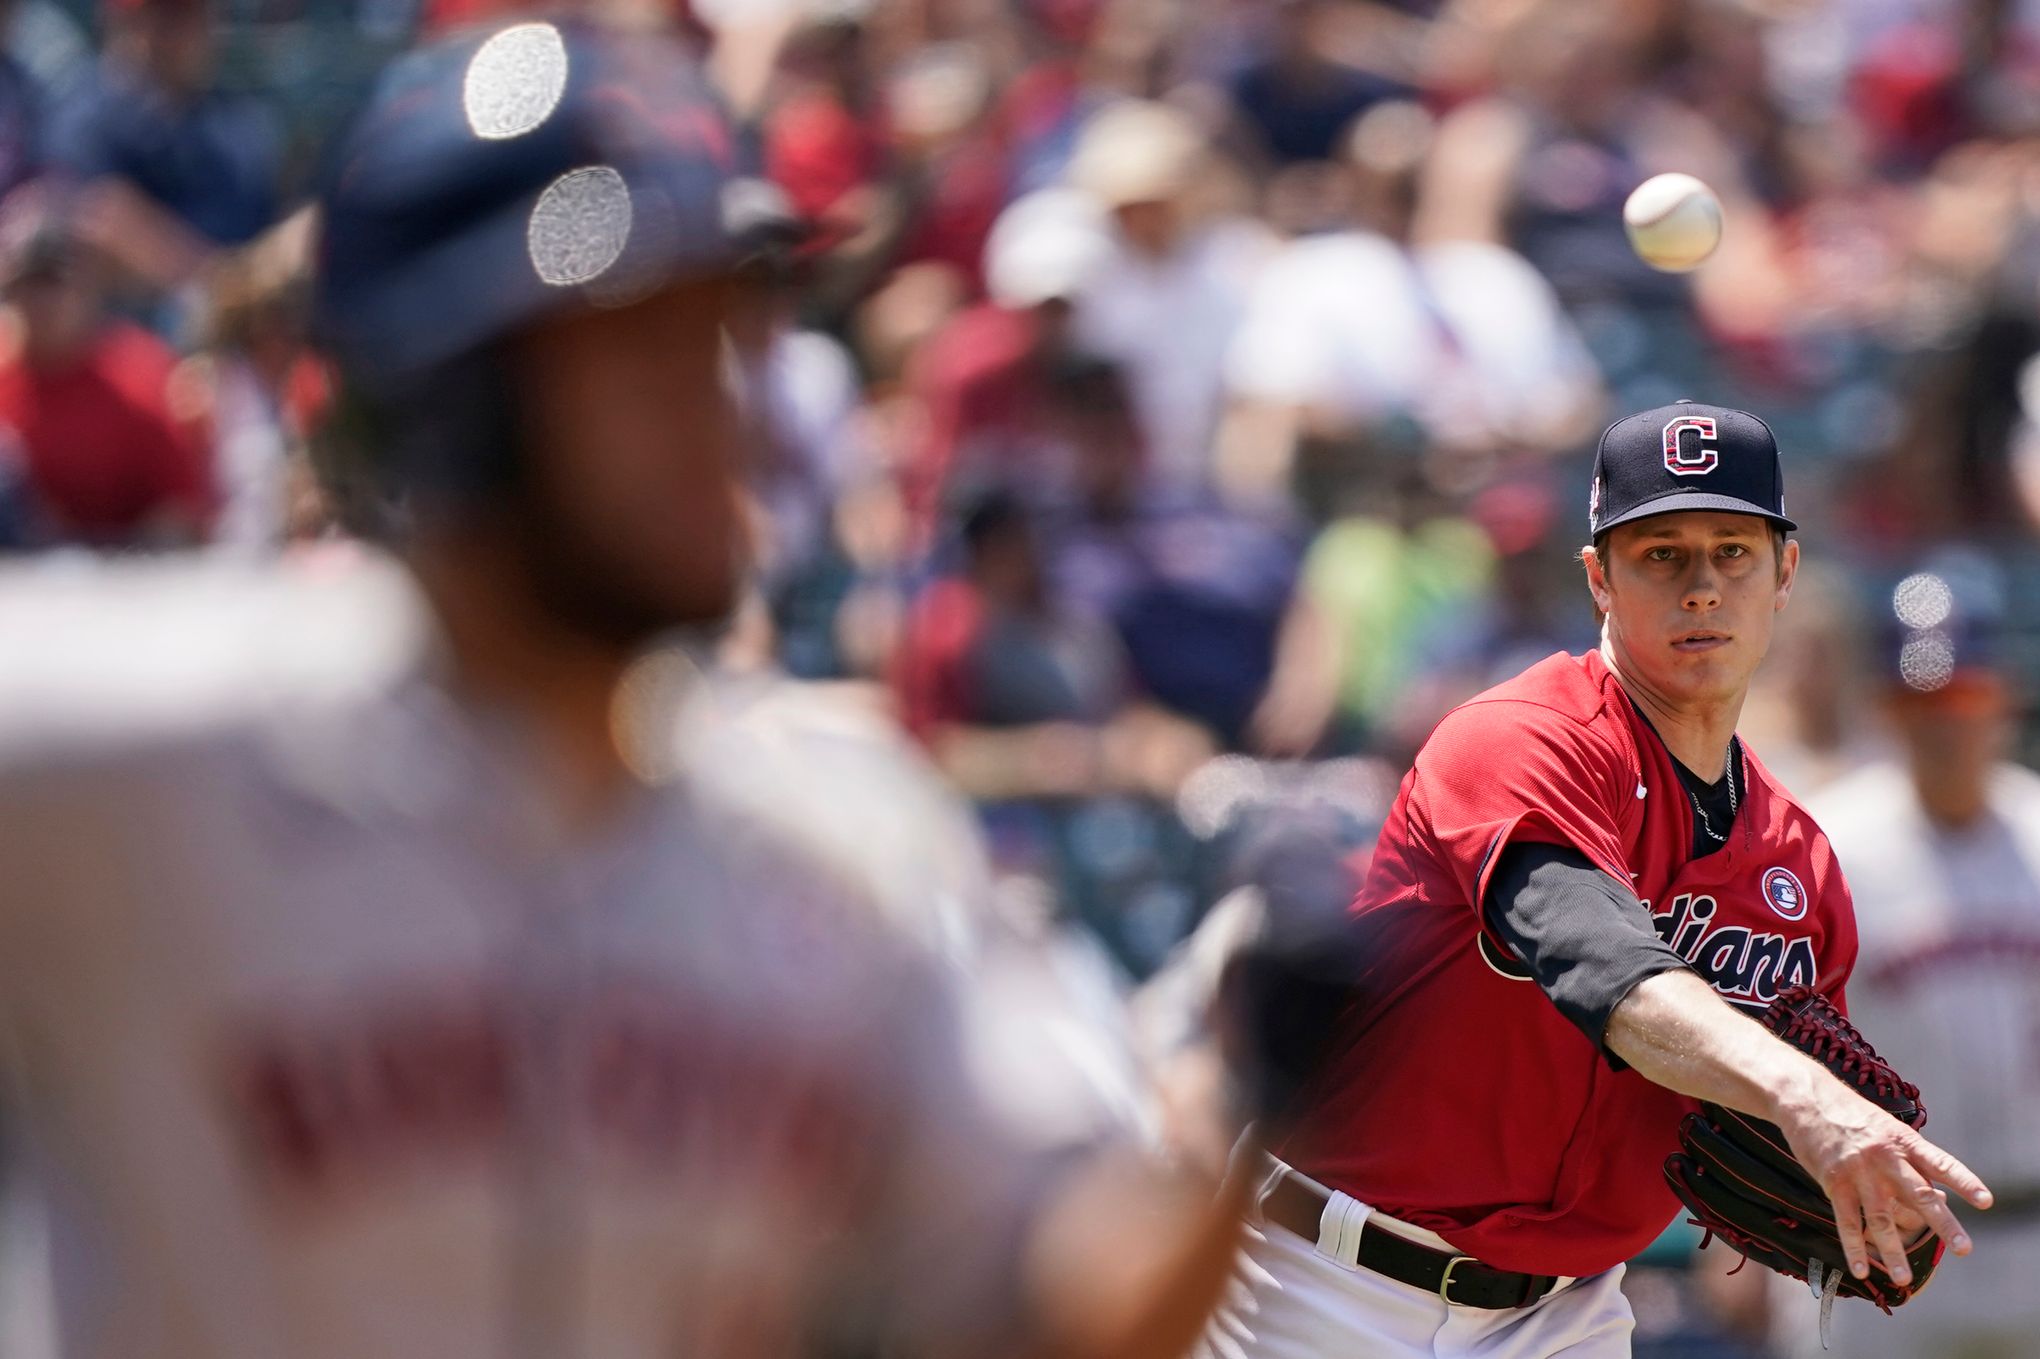 Astros, Indians swap Myles Straw for Phil Maton